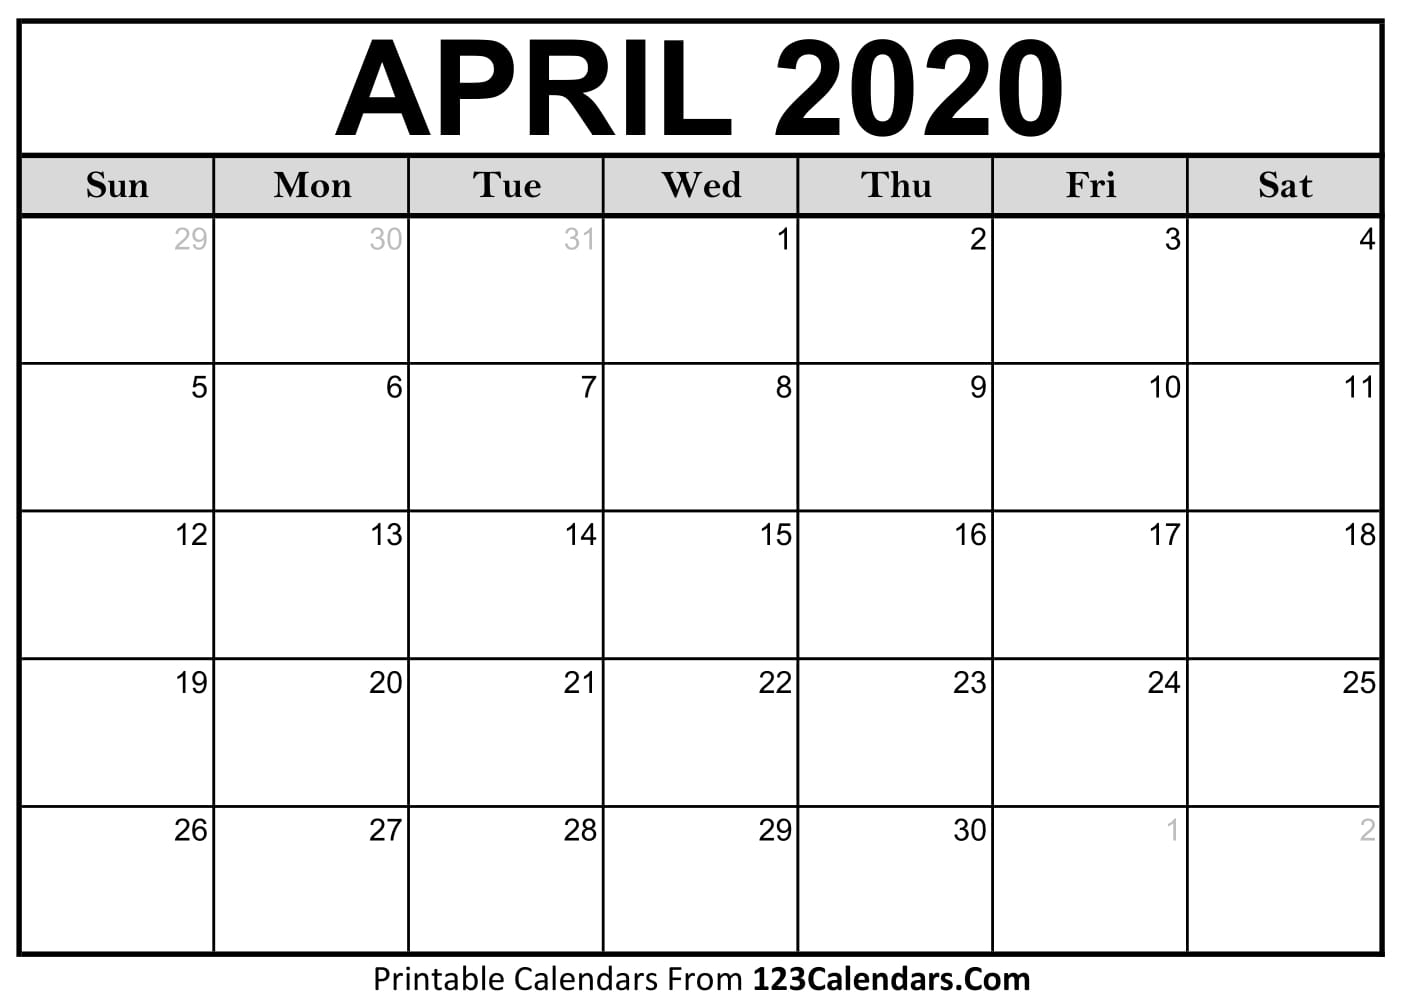 Printable Calendars April 2020  Bolan.horizonconsulting.co with regard to Free Printable April 2020 Calendar